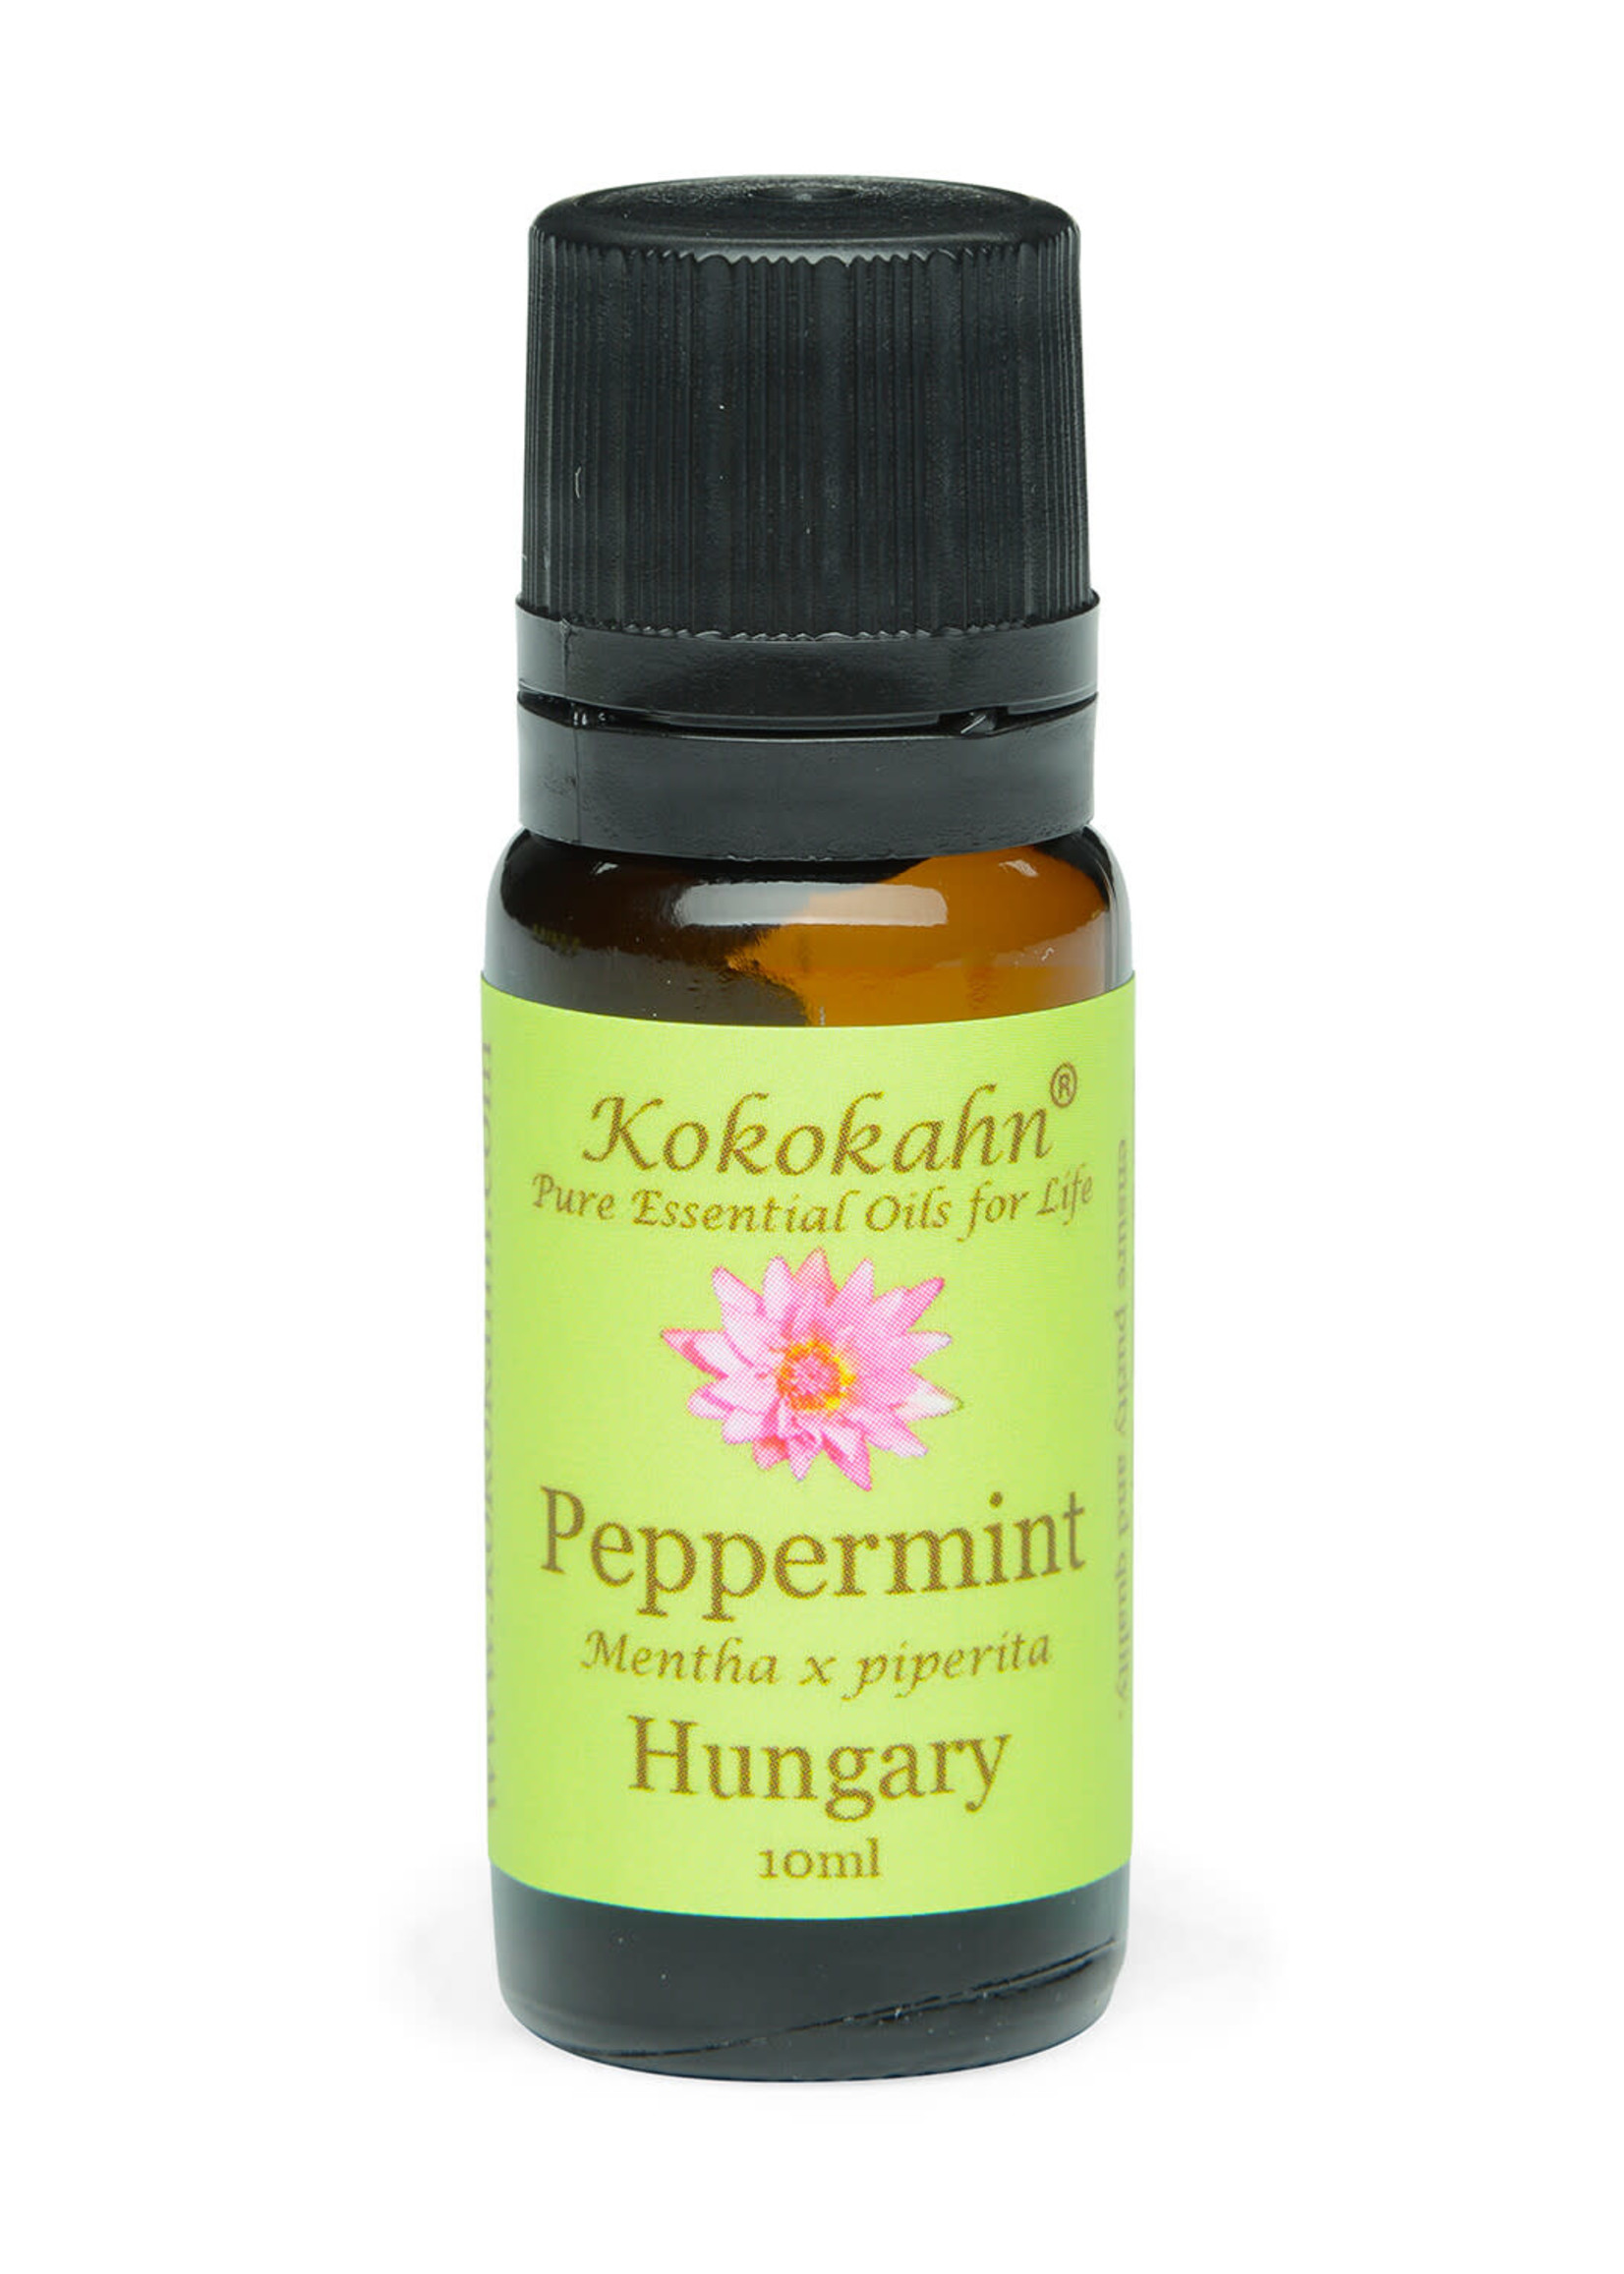 Kokokahn Peppermint Essential Oil